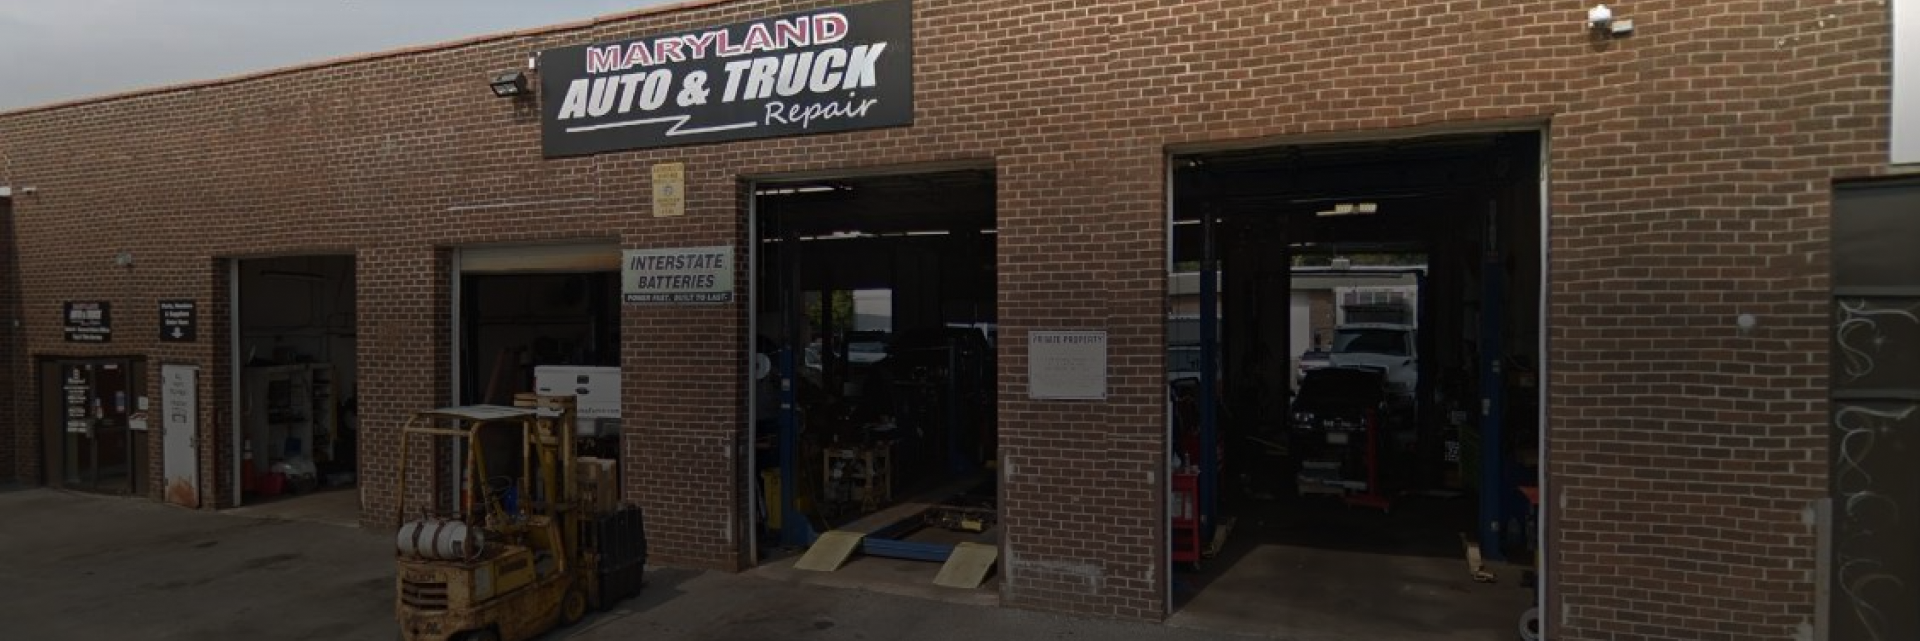 Glen Burnie Auto Repair - Maryland Auto & Truck Repair